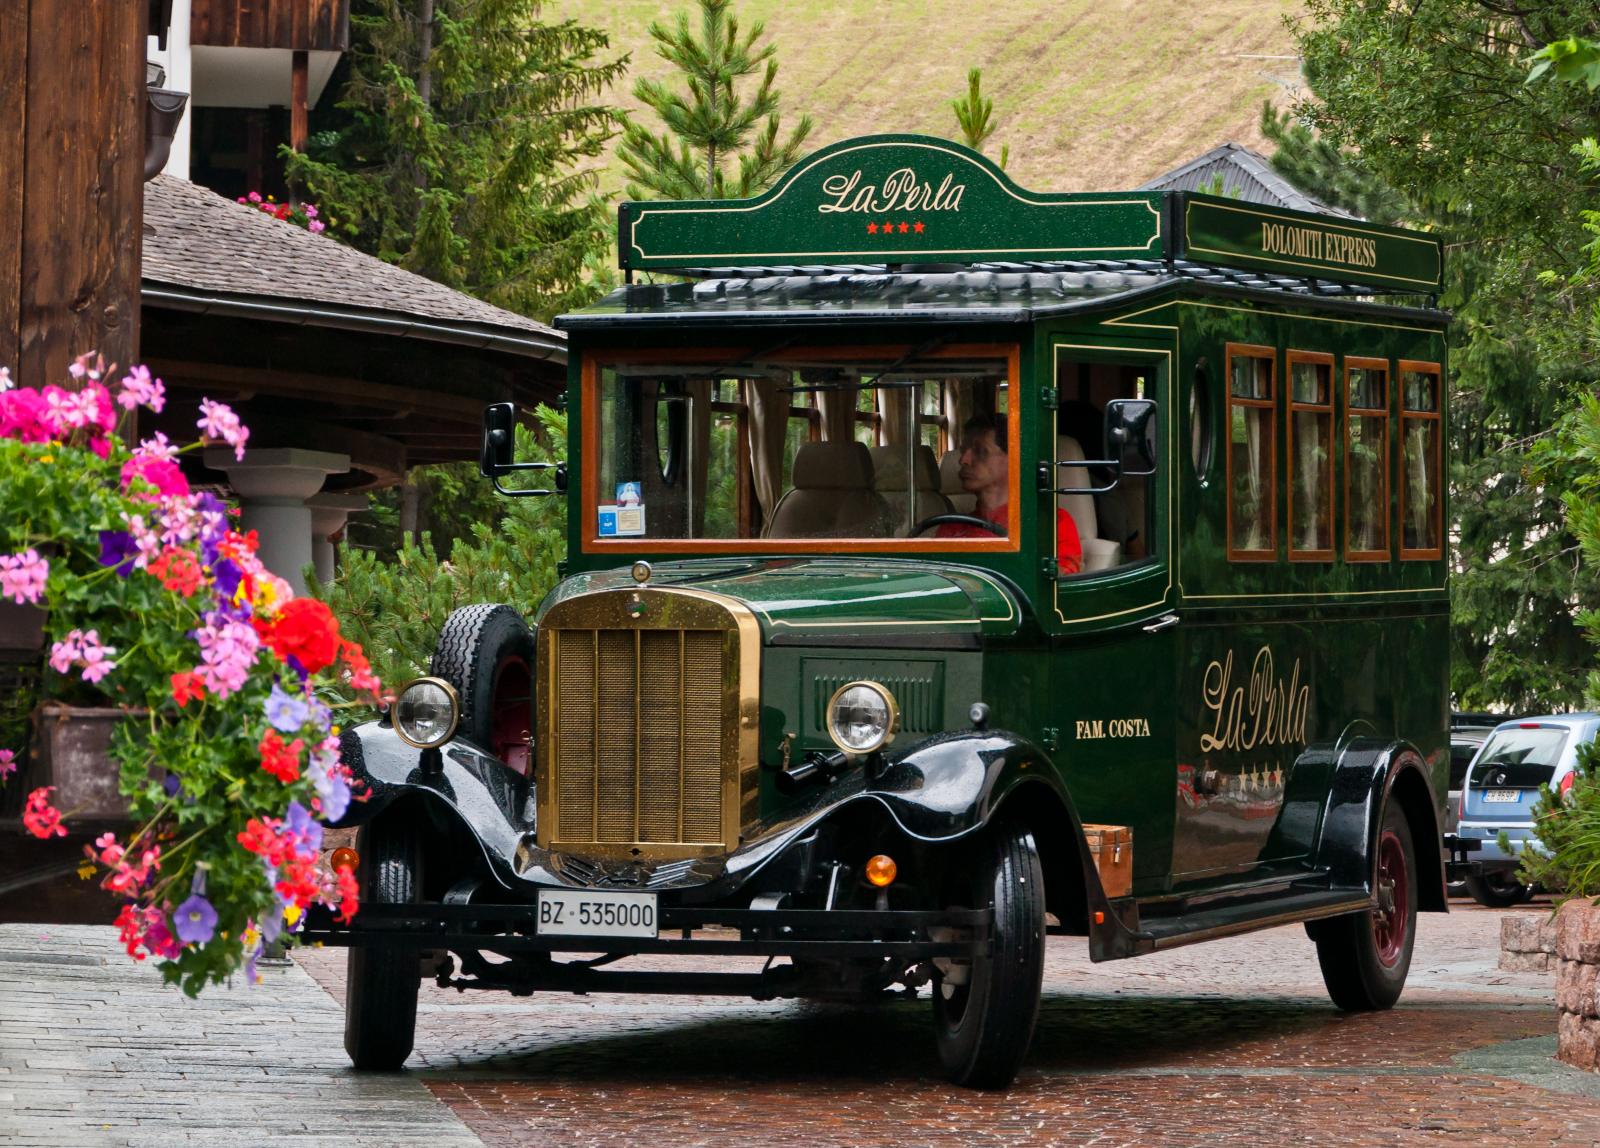 La Perla Dolomiti Express restored bus at Corvara in Badia, Dolomites, Italy.